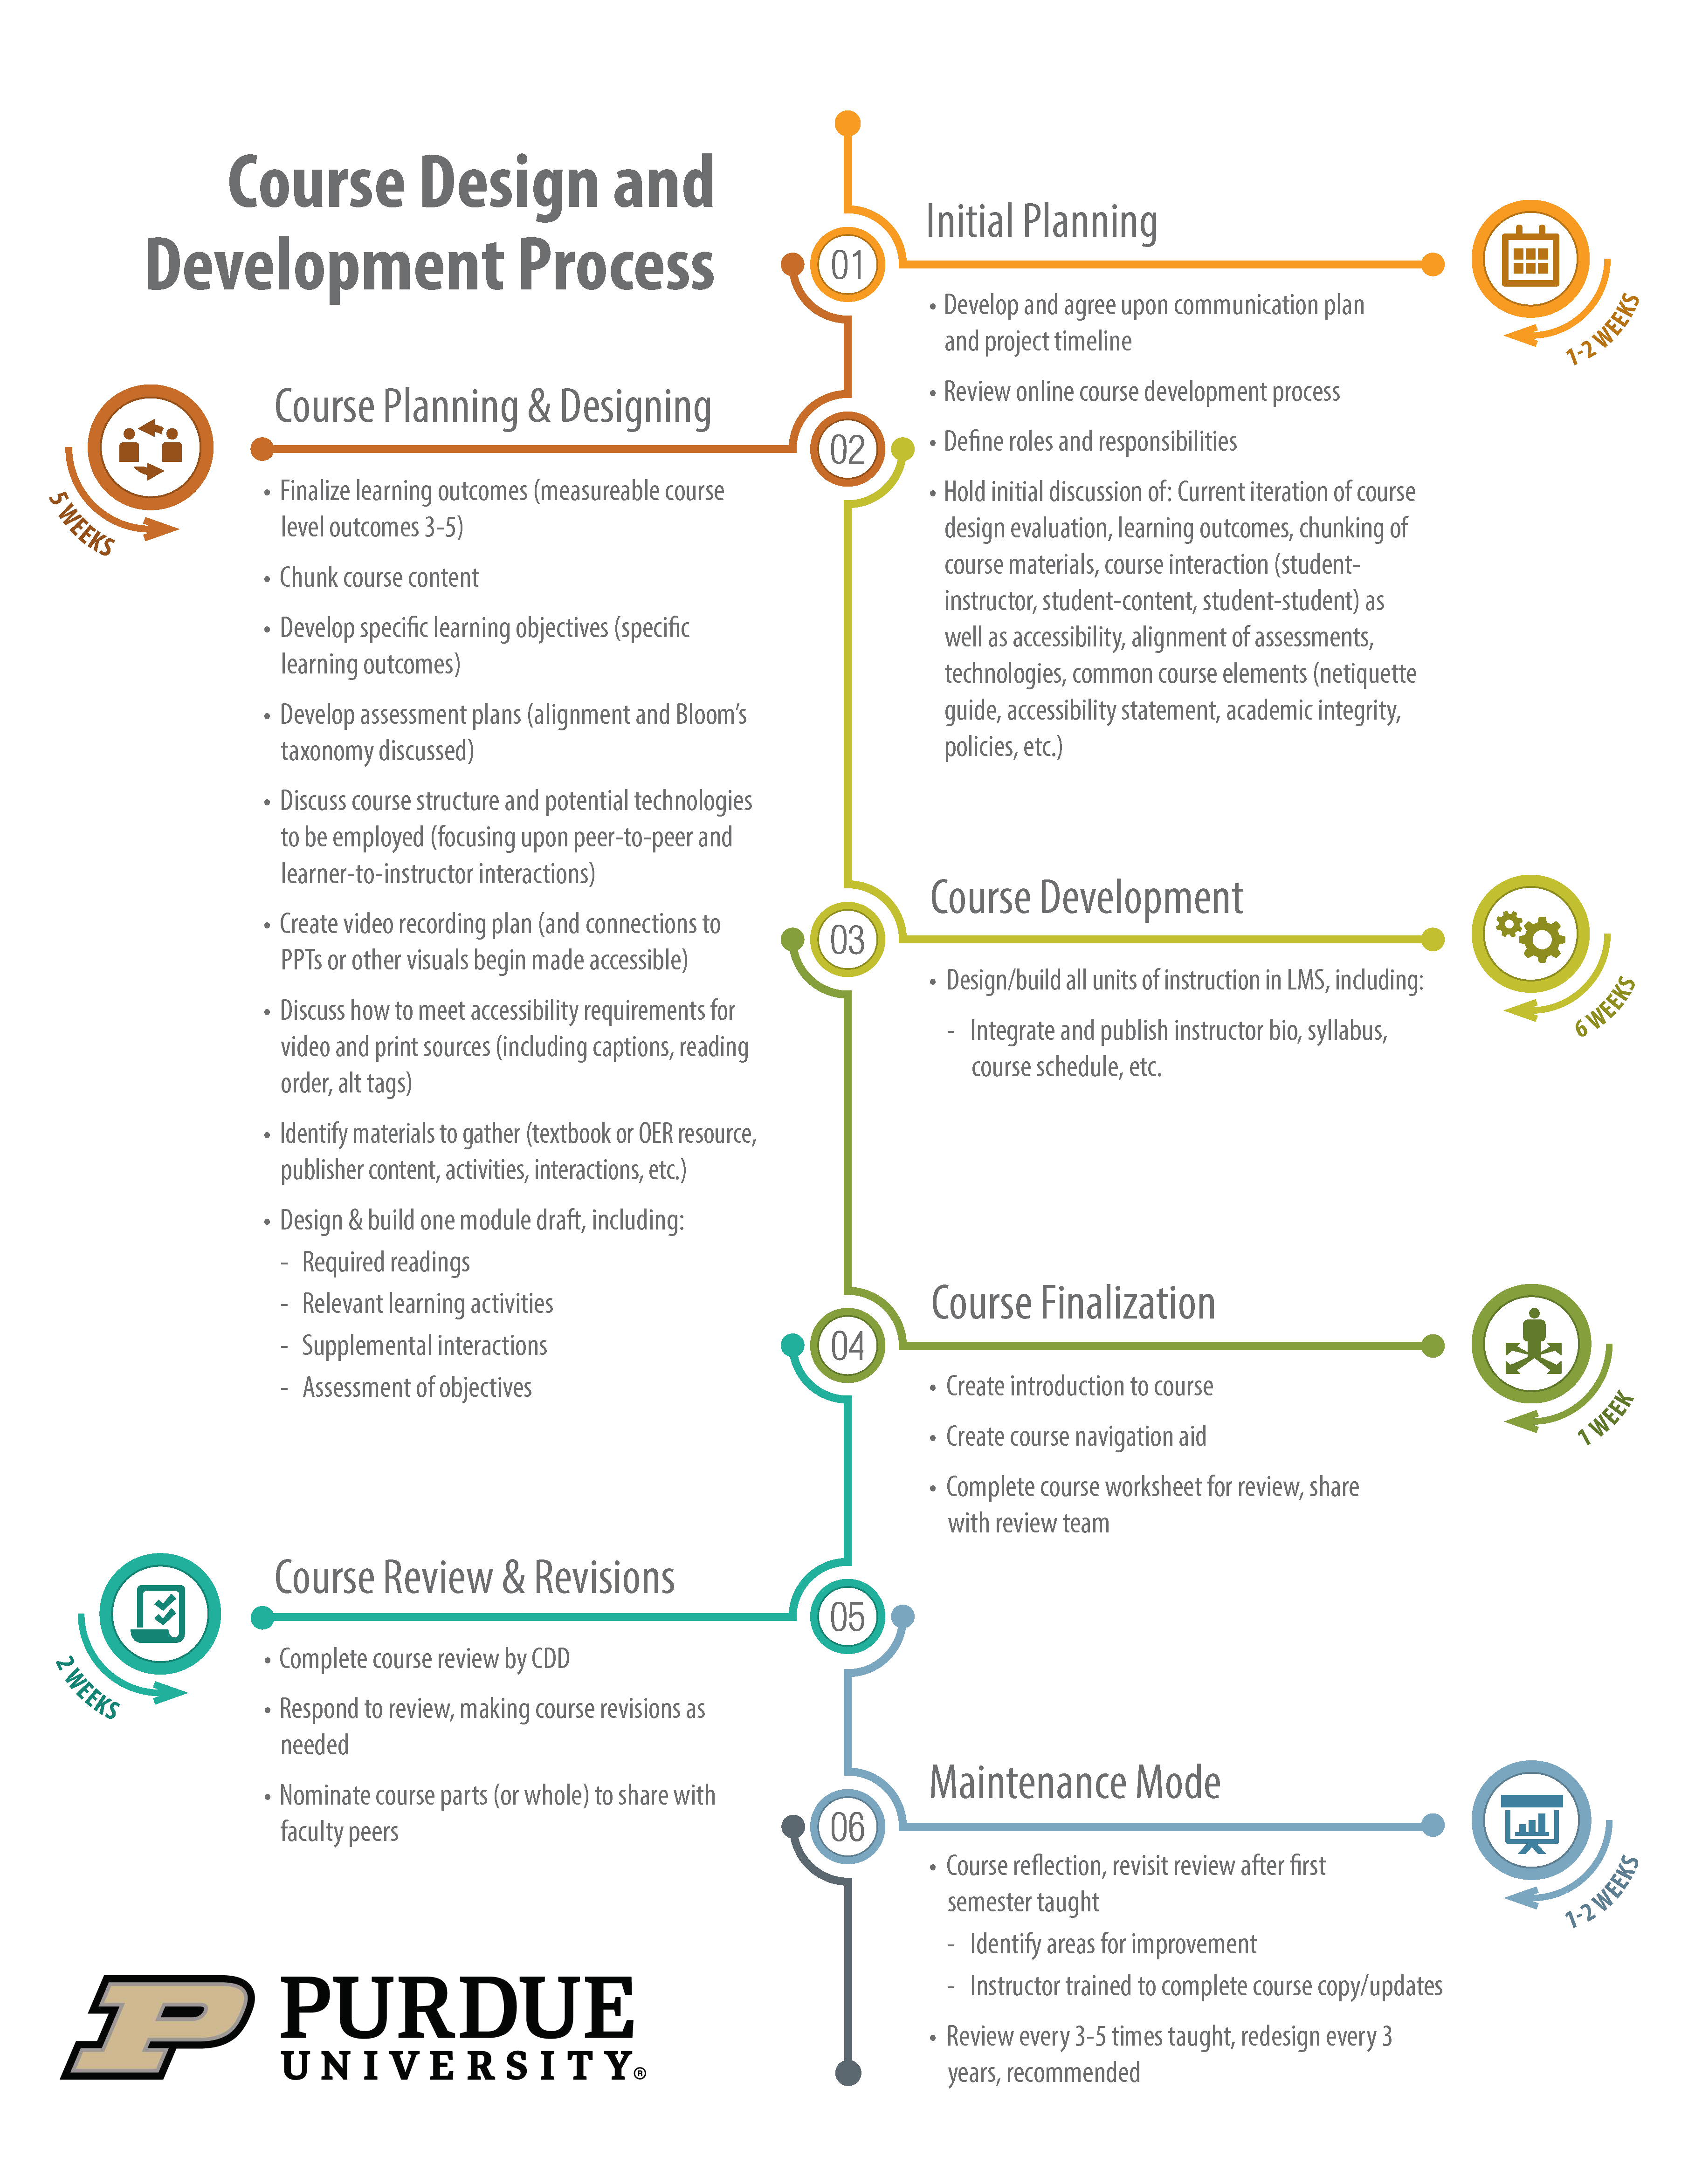 Course Design and Development Process